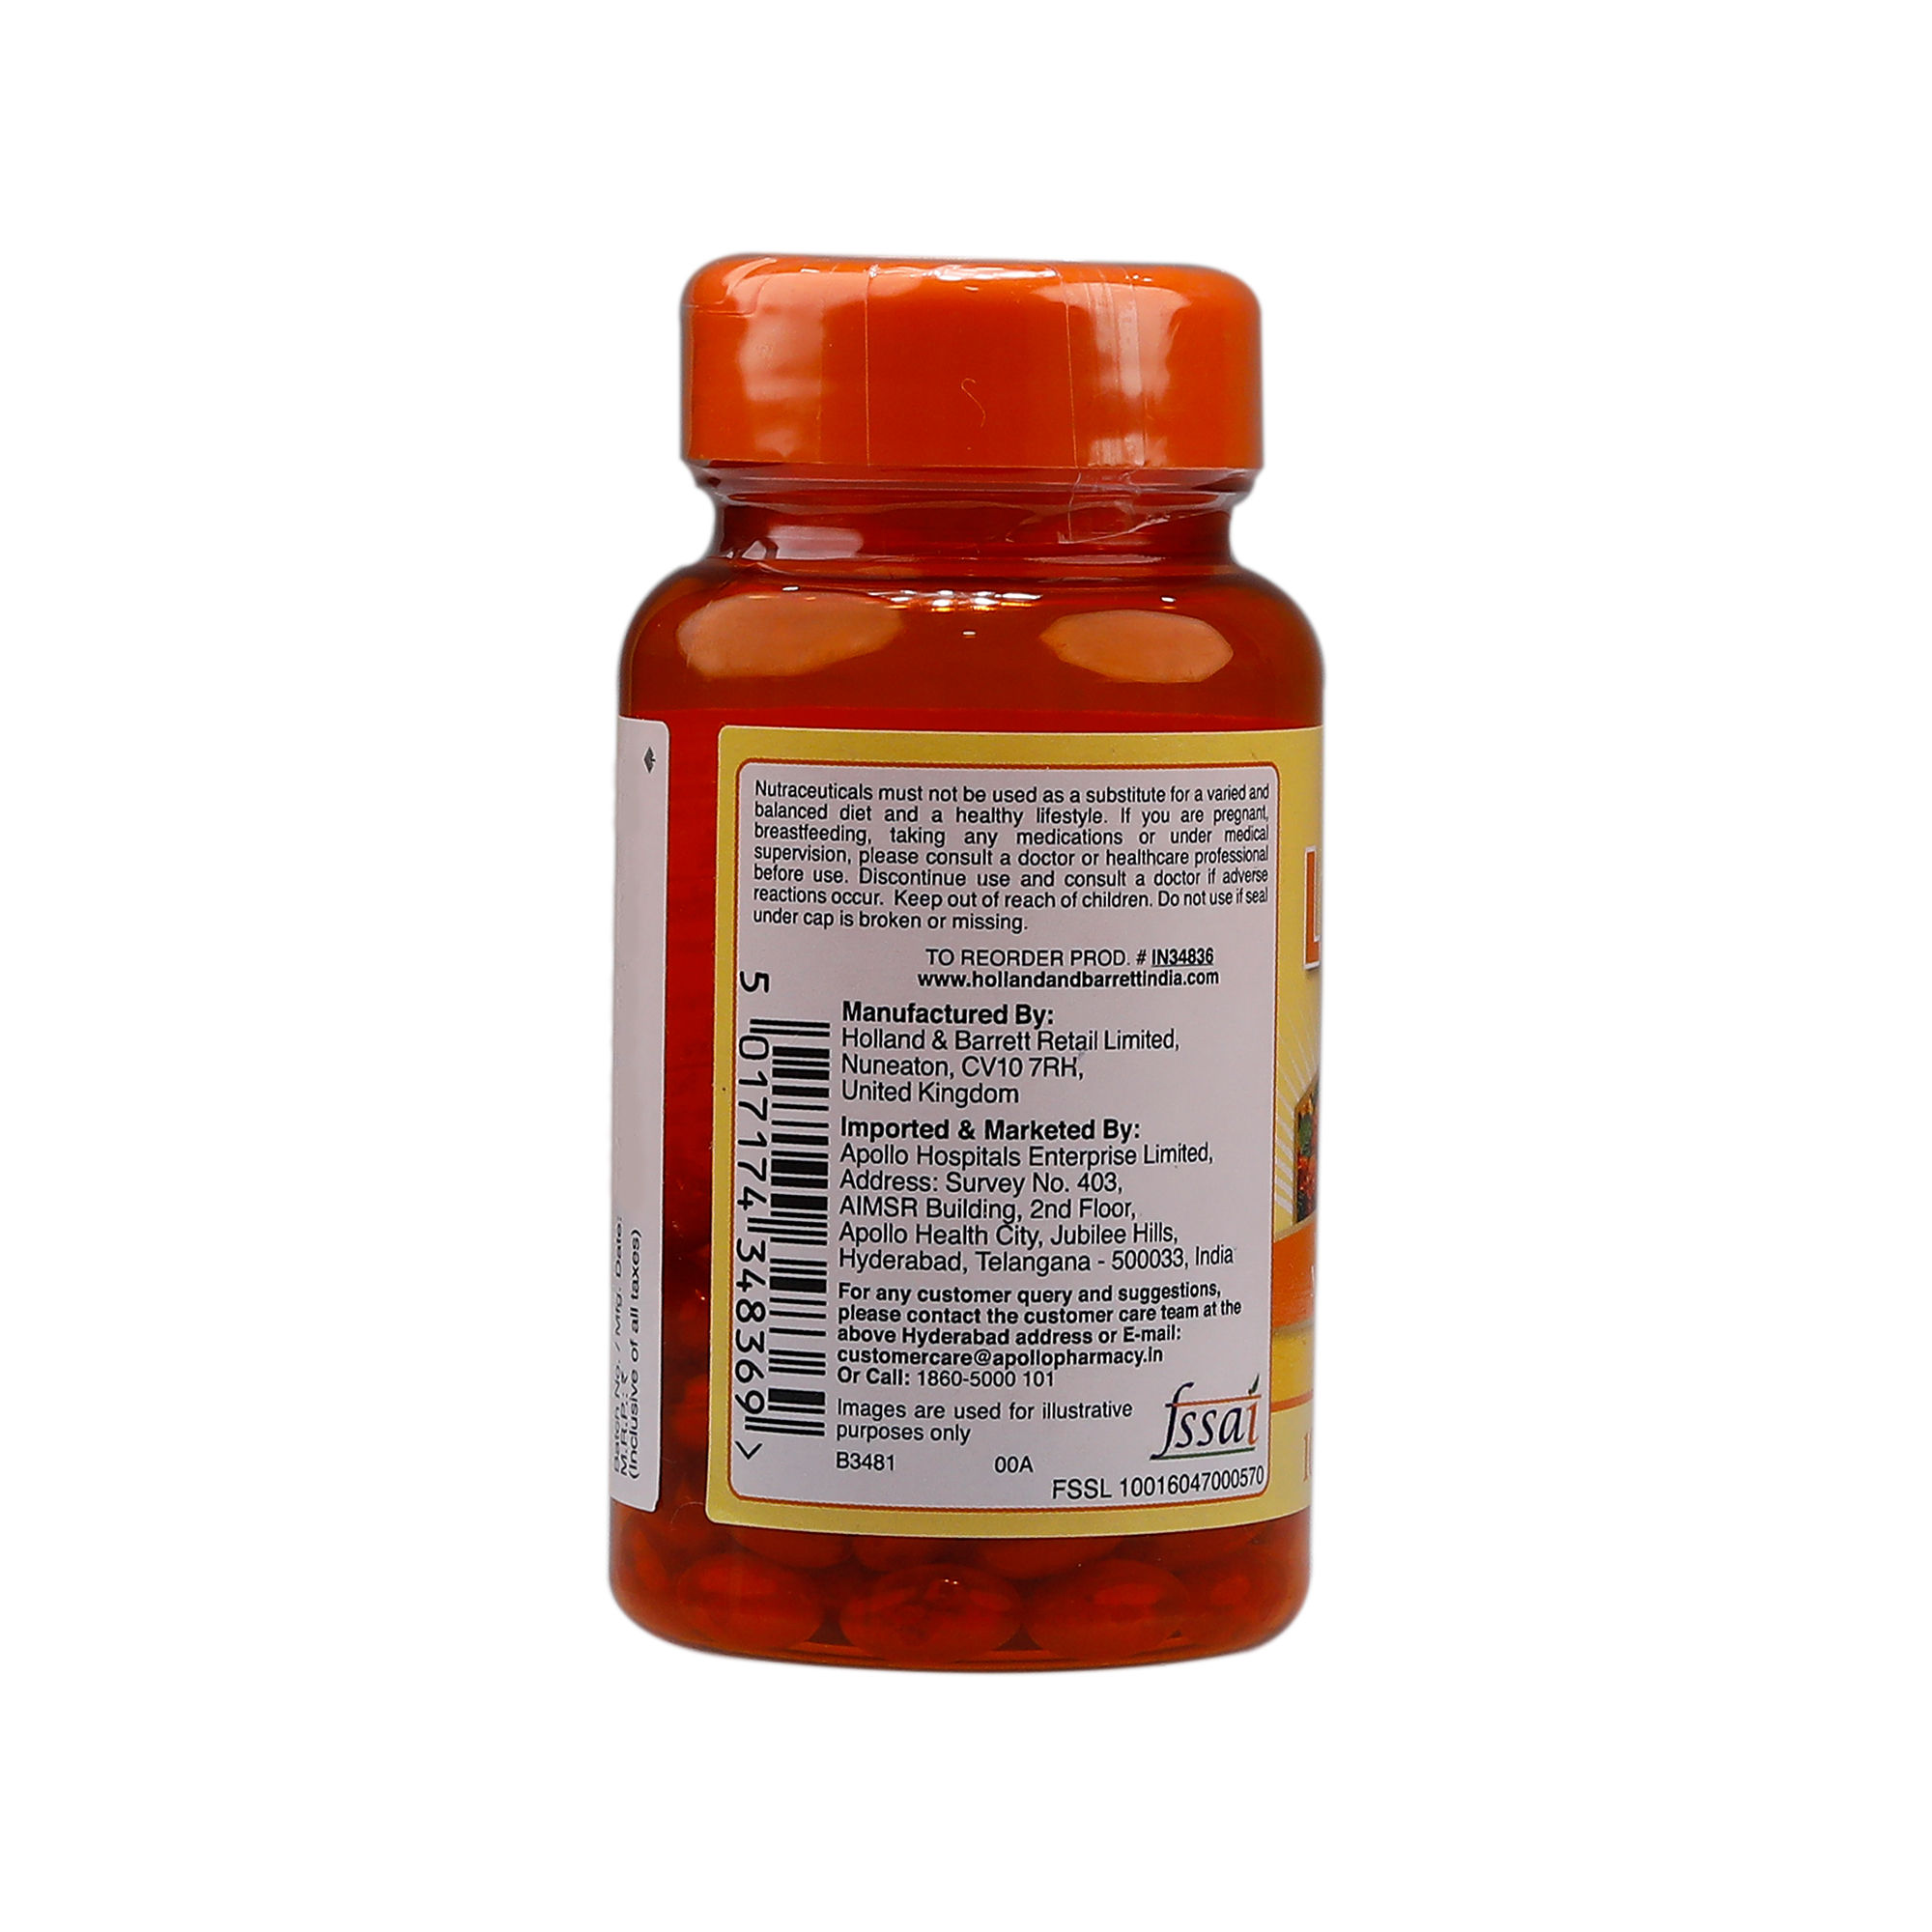 Holland & Barrett Lutigold Natural Carotenoid 6 mg, 100 Capsules, Pack of 1 